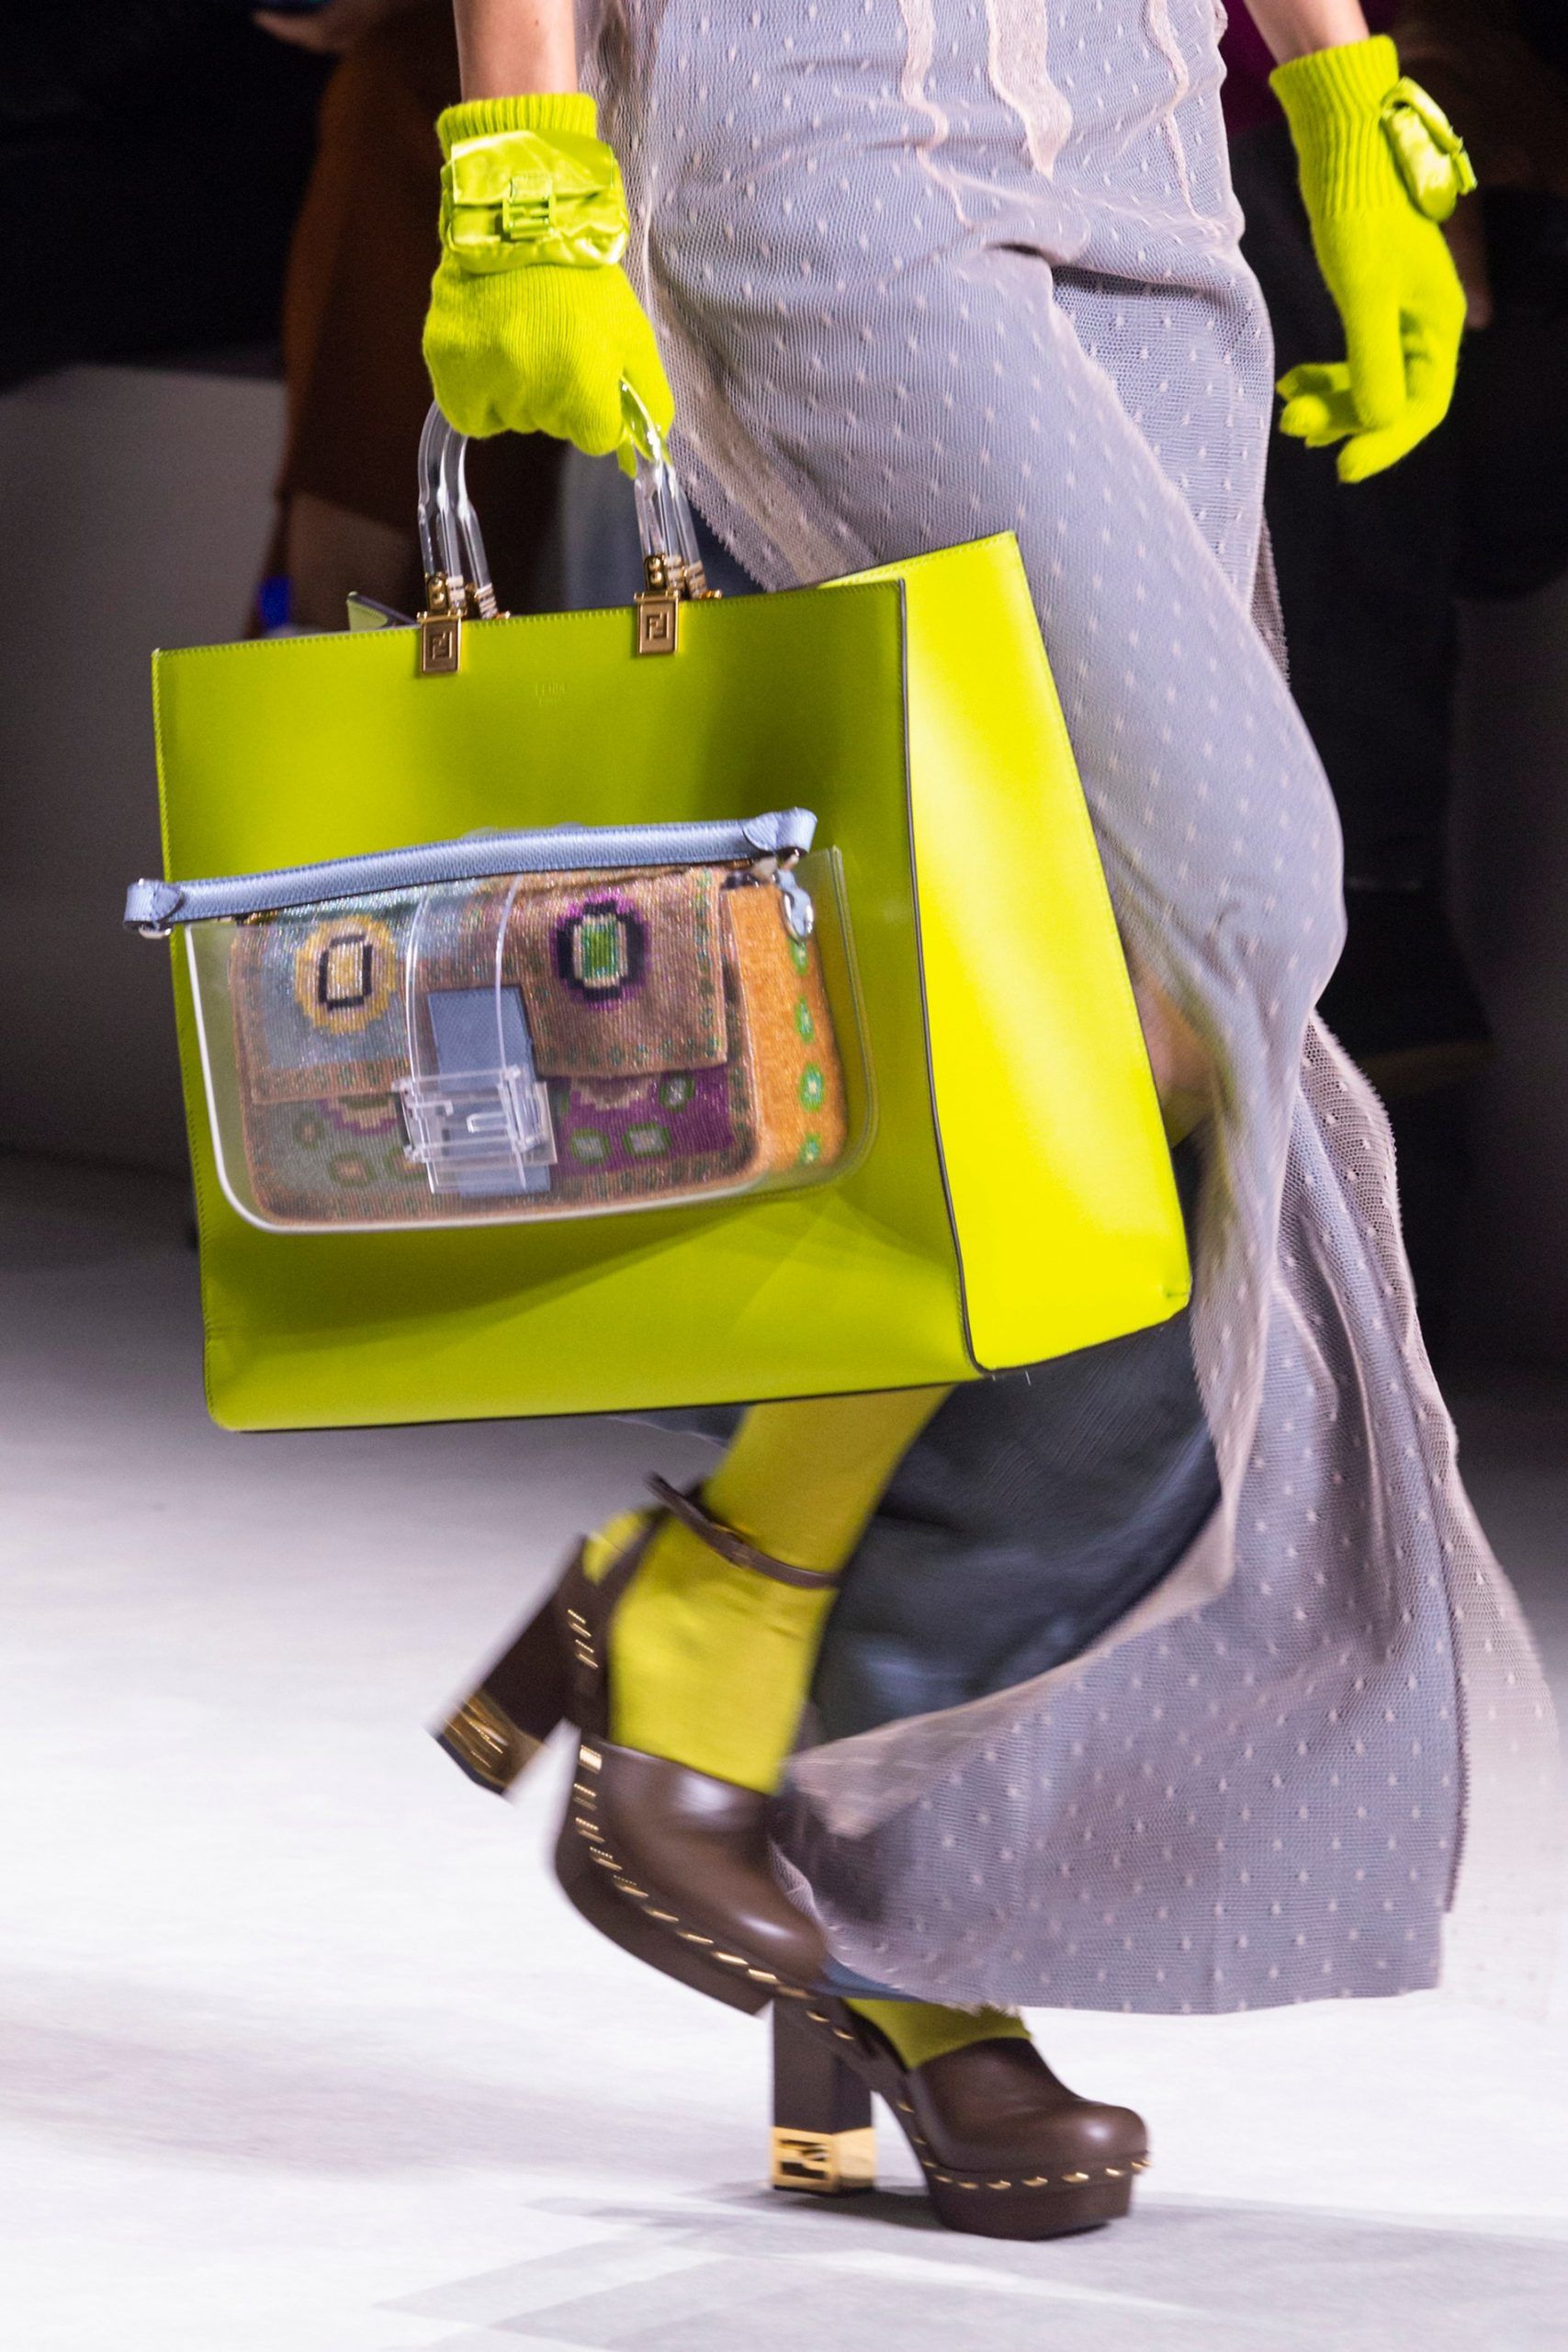 Sarah Jessica Parker Teams with Fendi to Design Baguette Bag